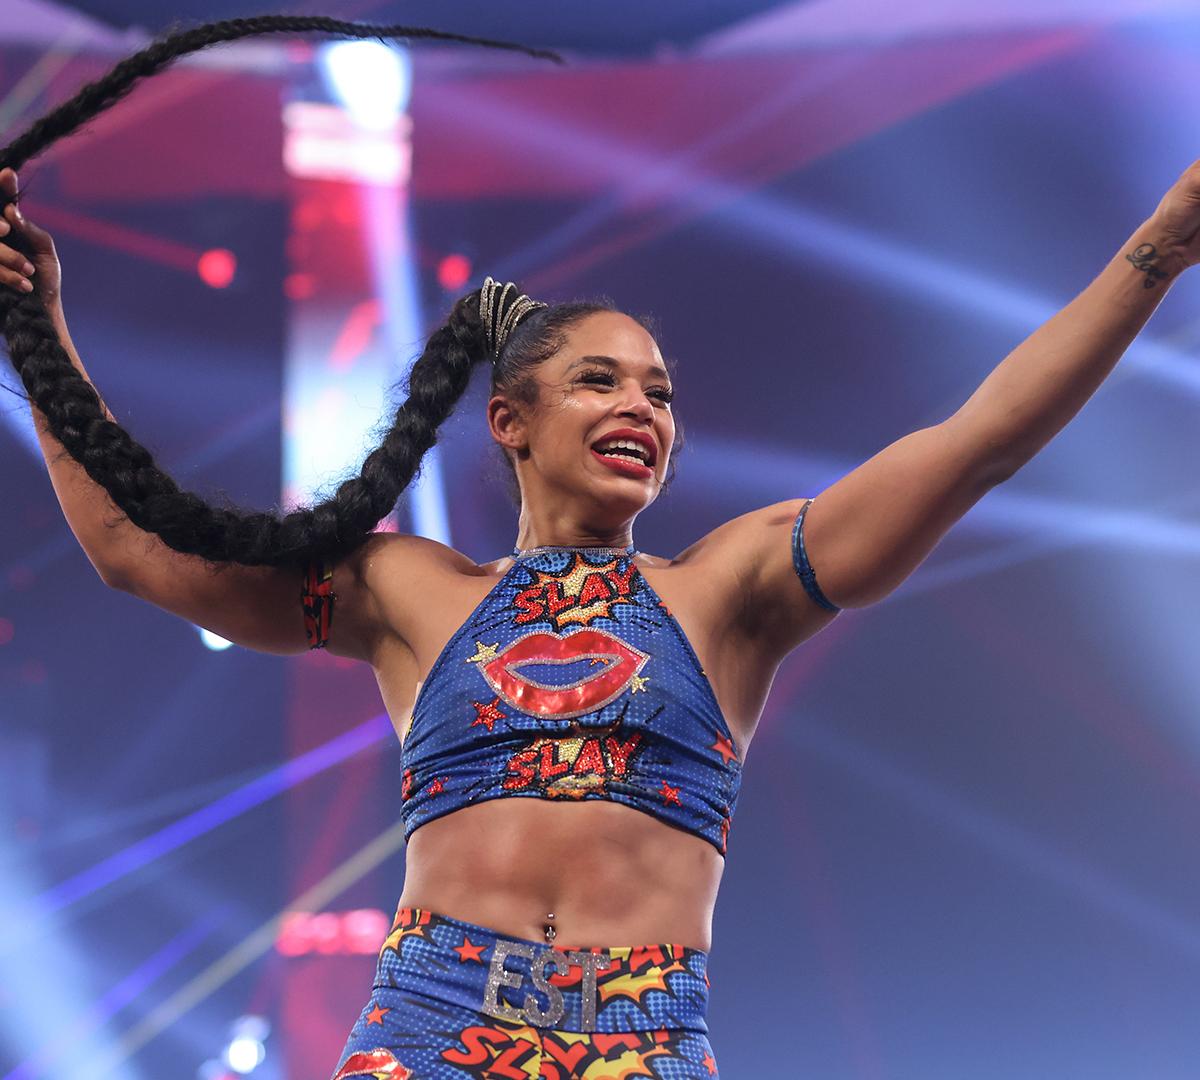 Sasha Banks vs. Bianca Belair Announced for WWE WrestleMania 37